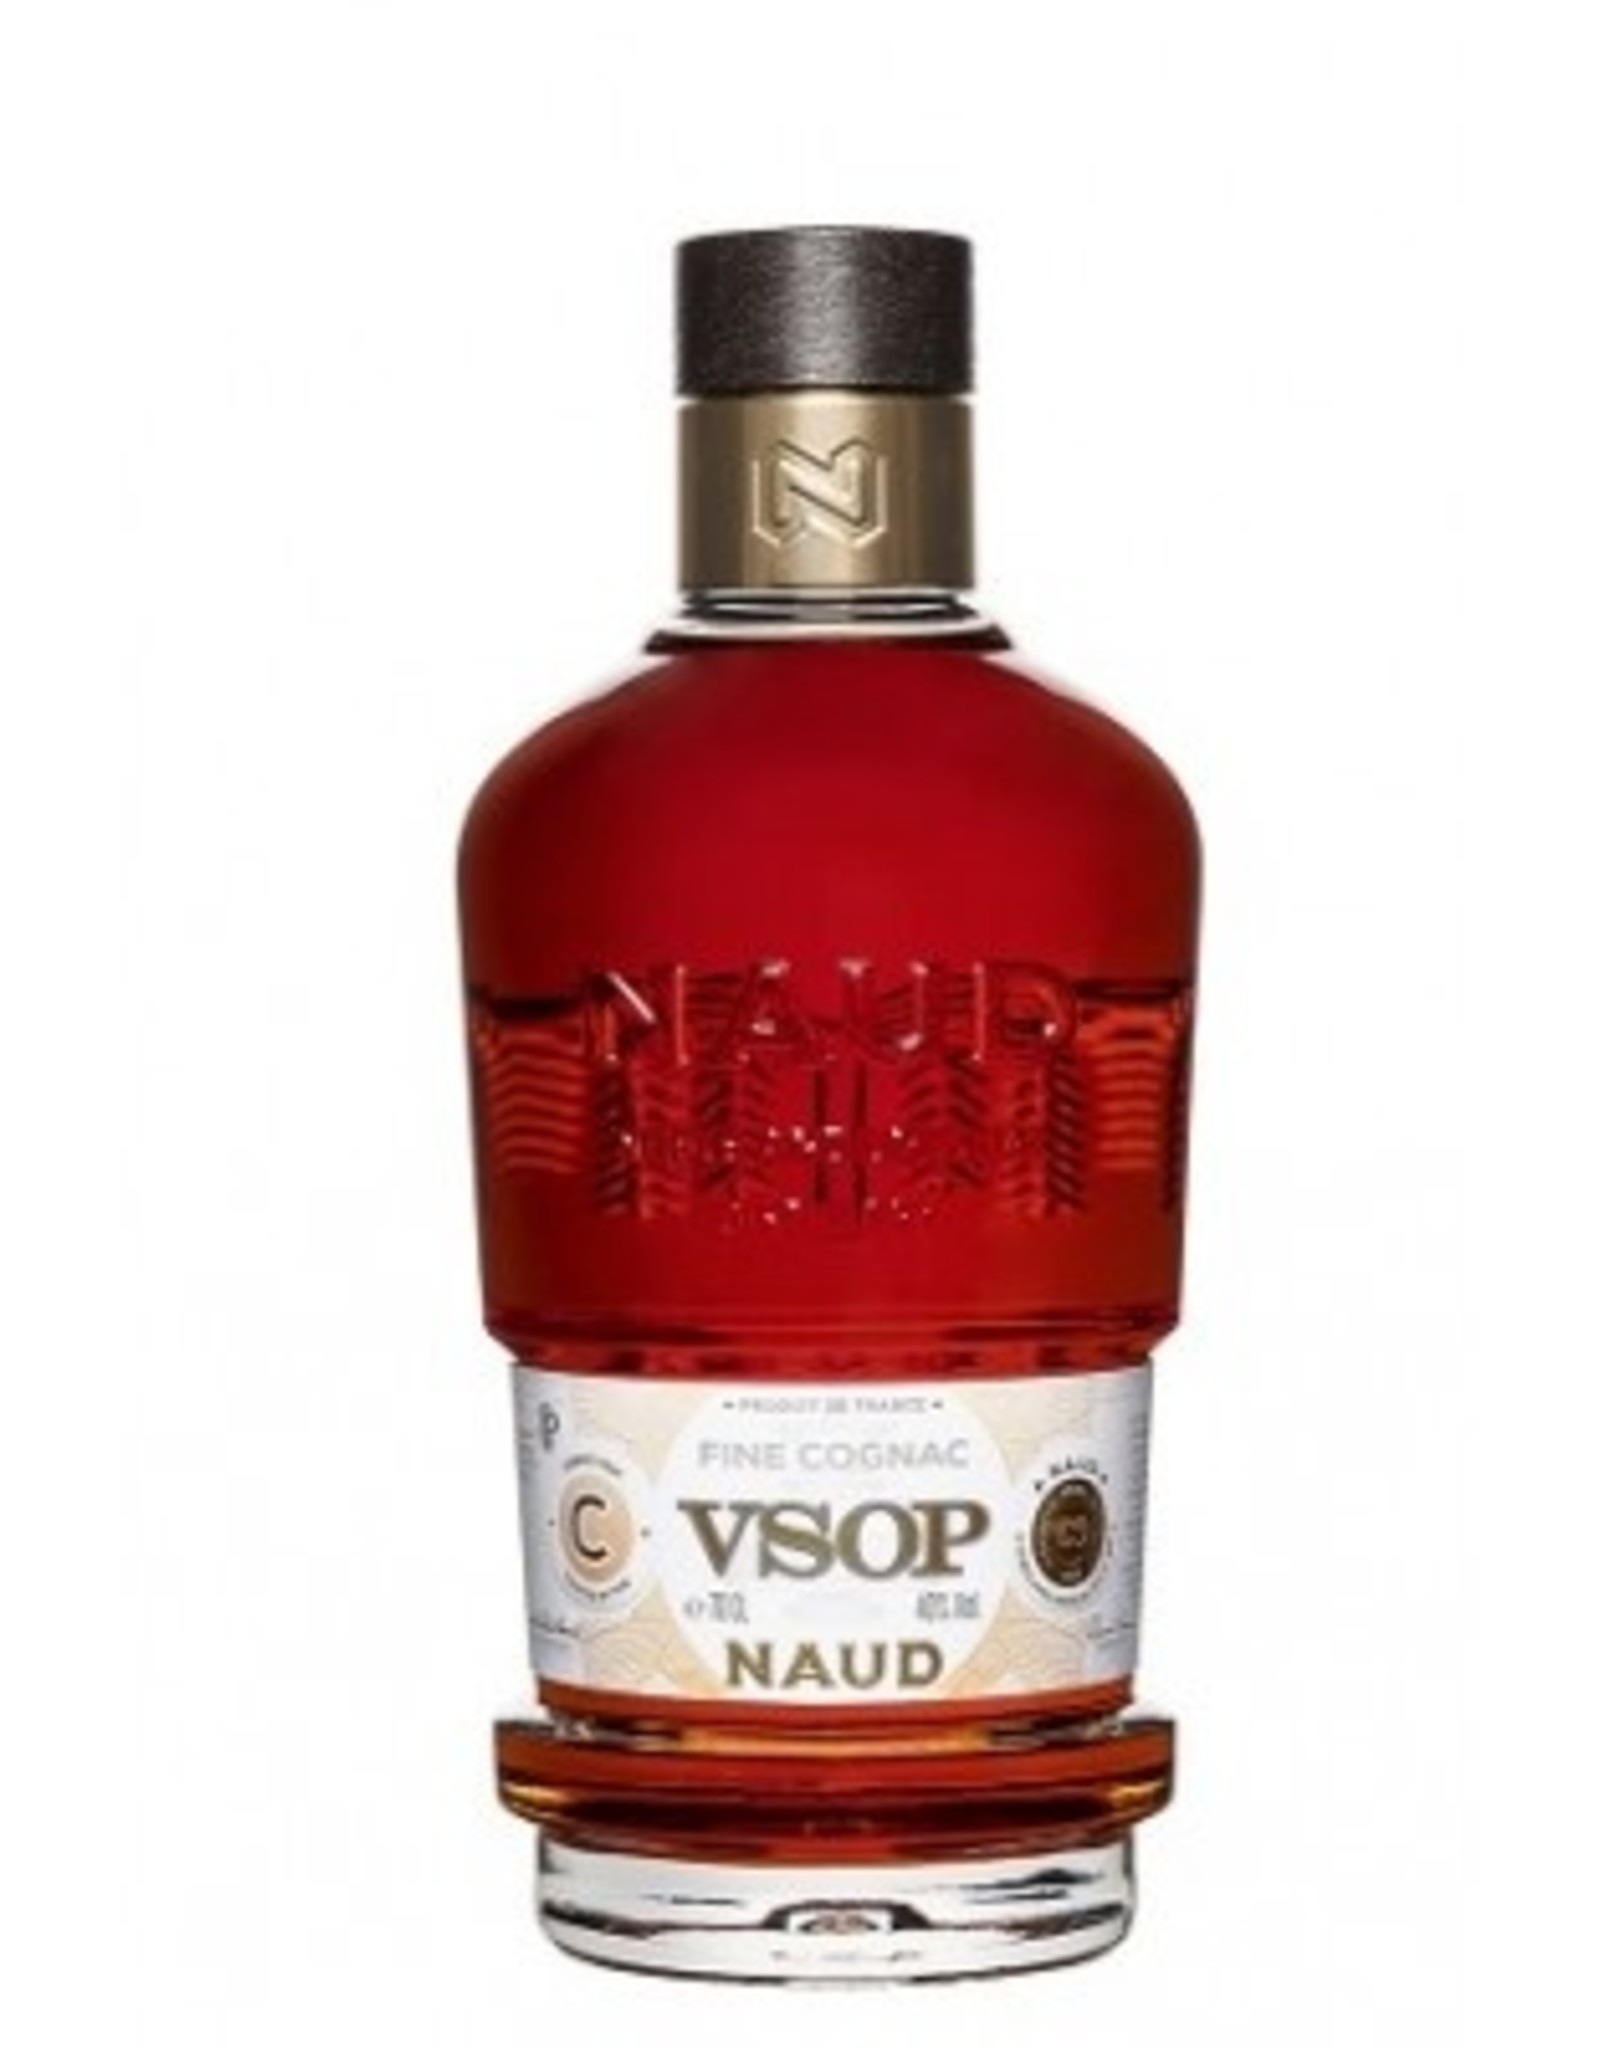 Naud Cognac VSOP